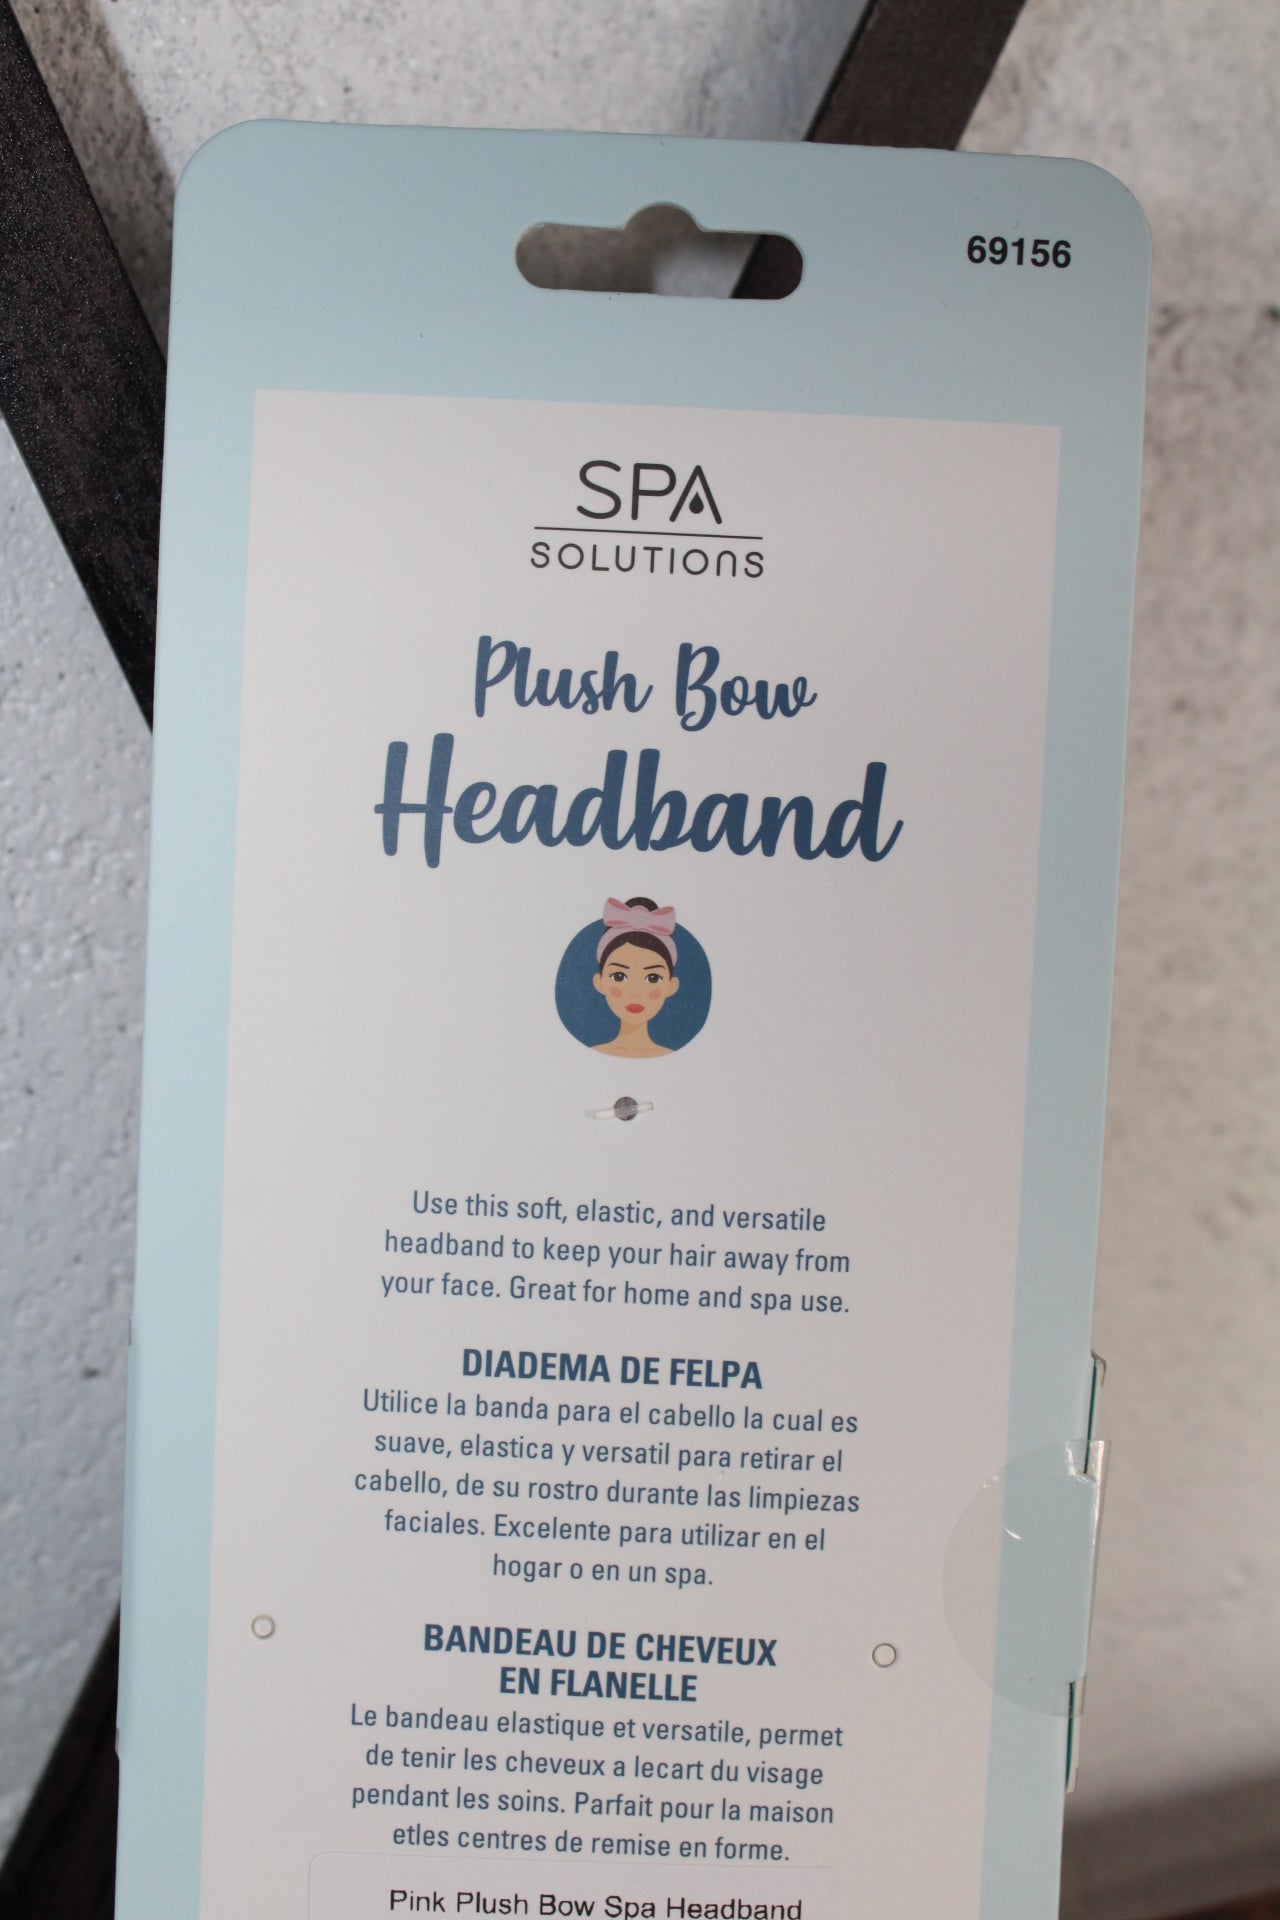 Pink Plush Bow Spa Headband